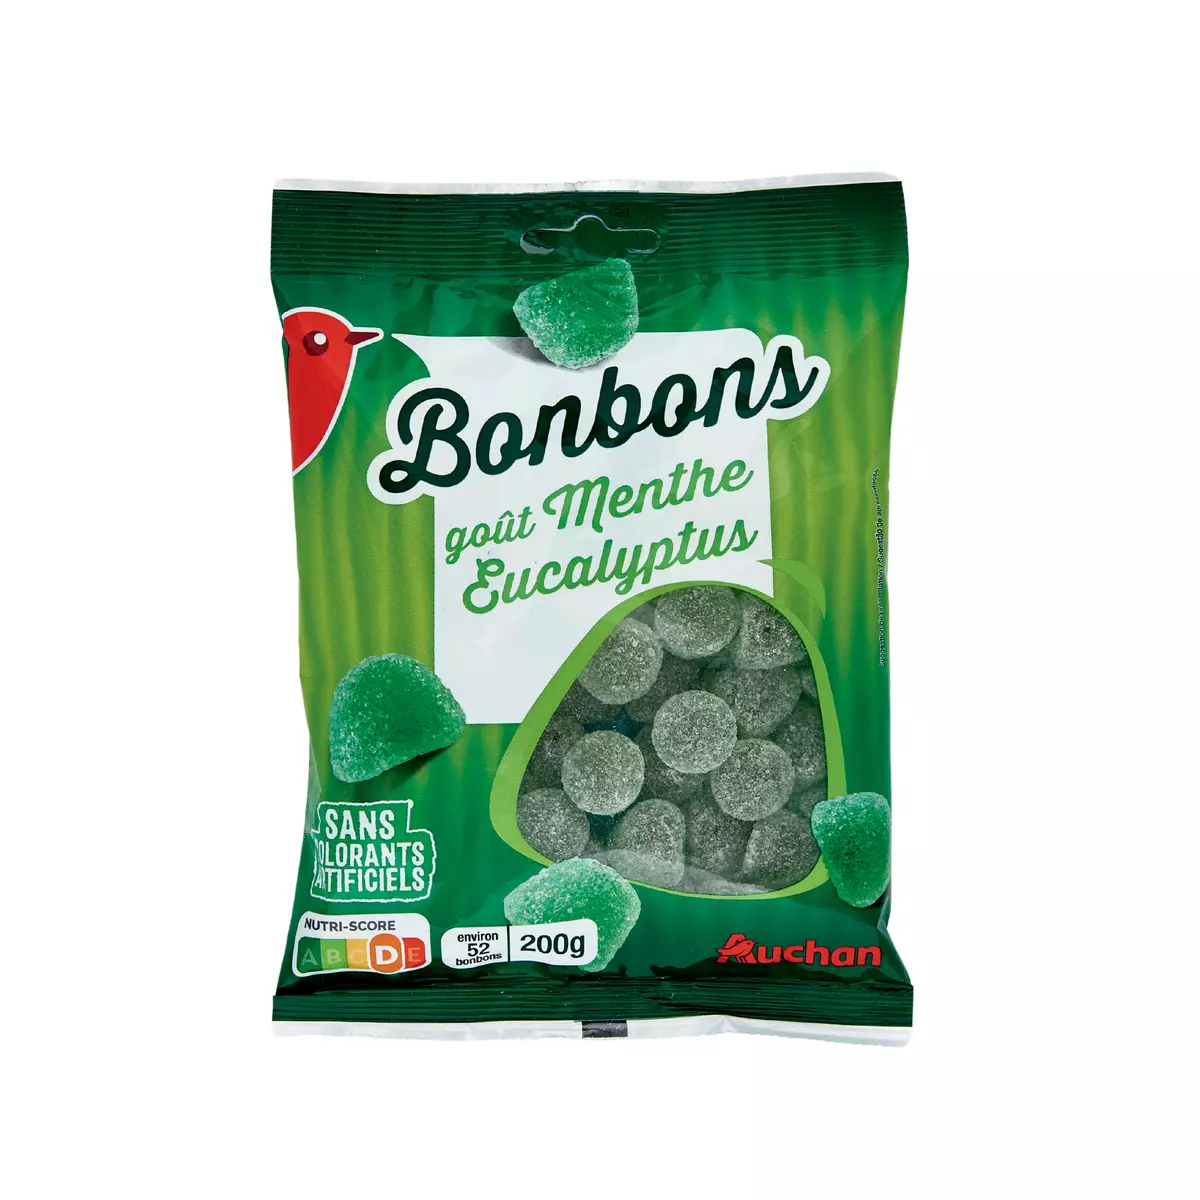 AUCHAN Bonbons goût menthe eucalyptus environ 52 bonbons 200g